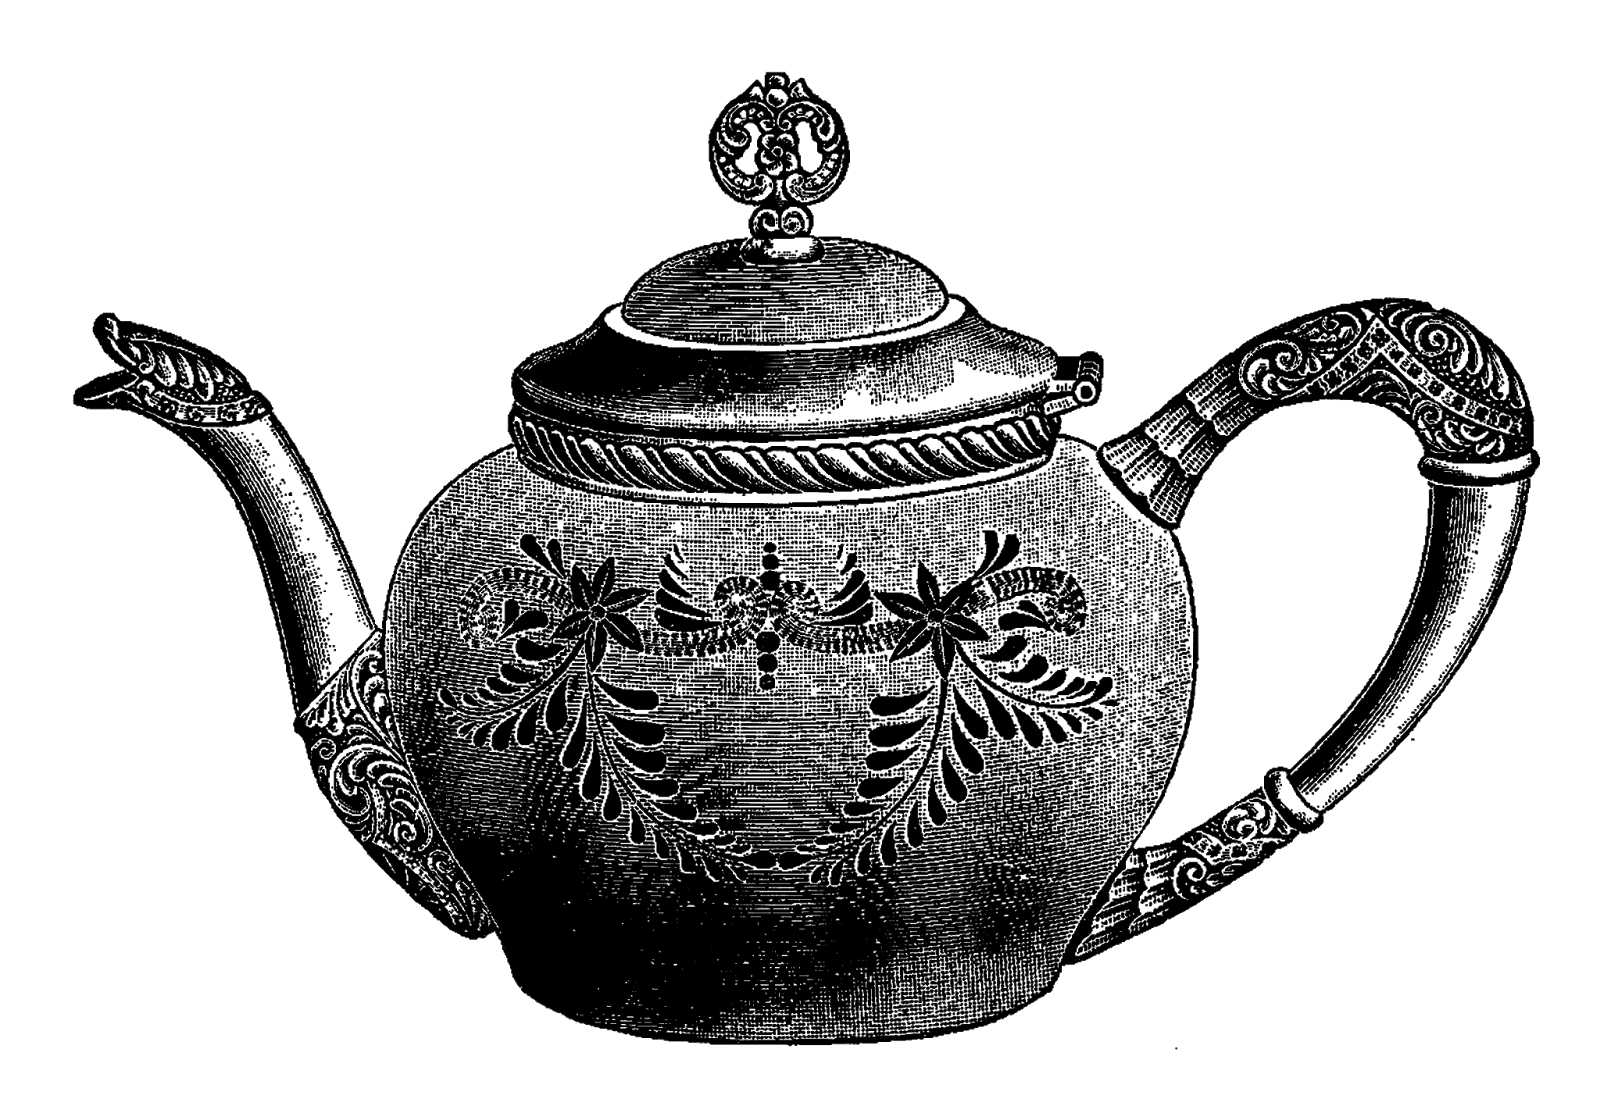 ms teapot teacup clip art